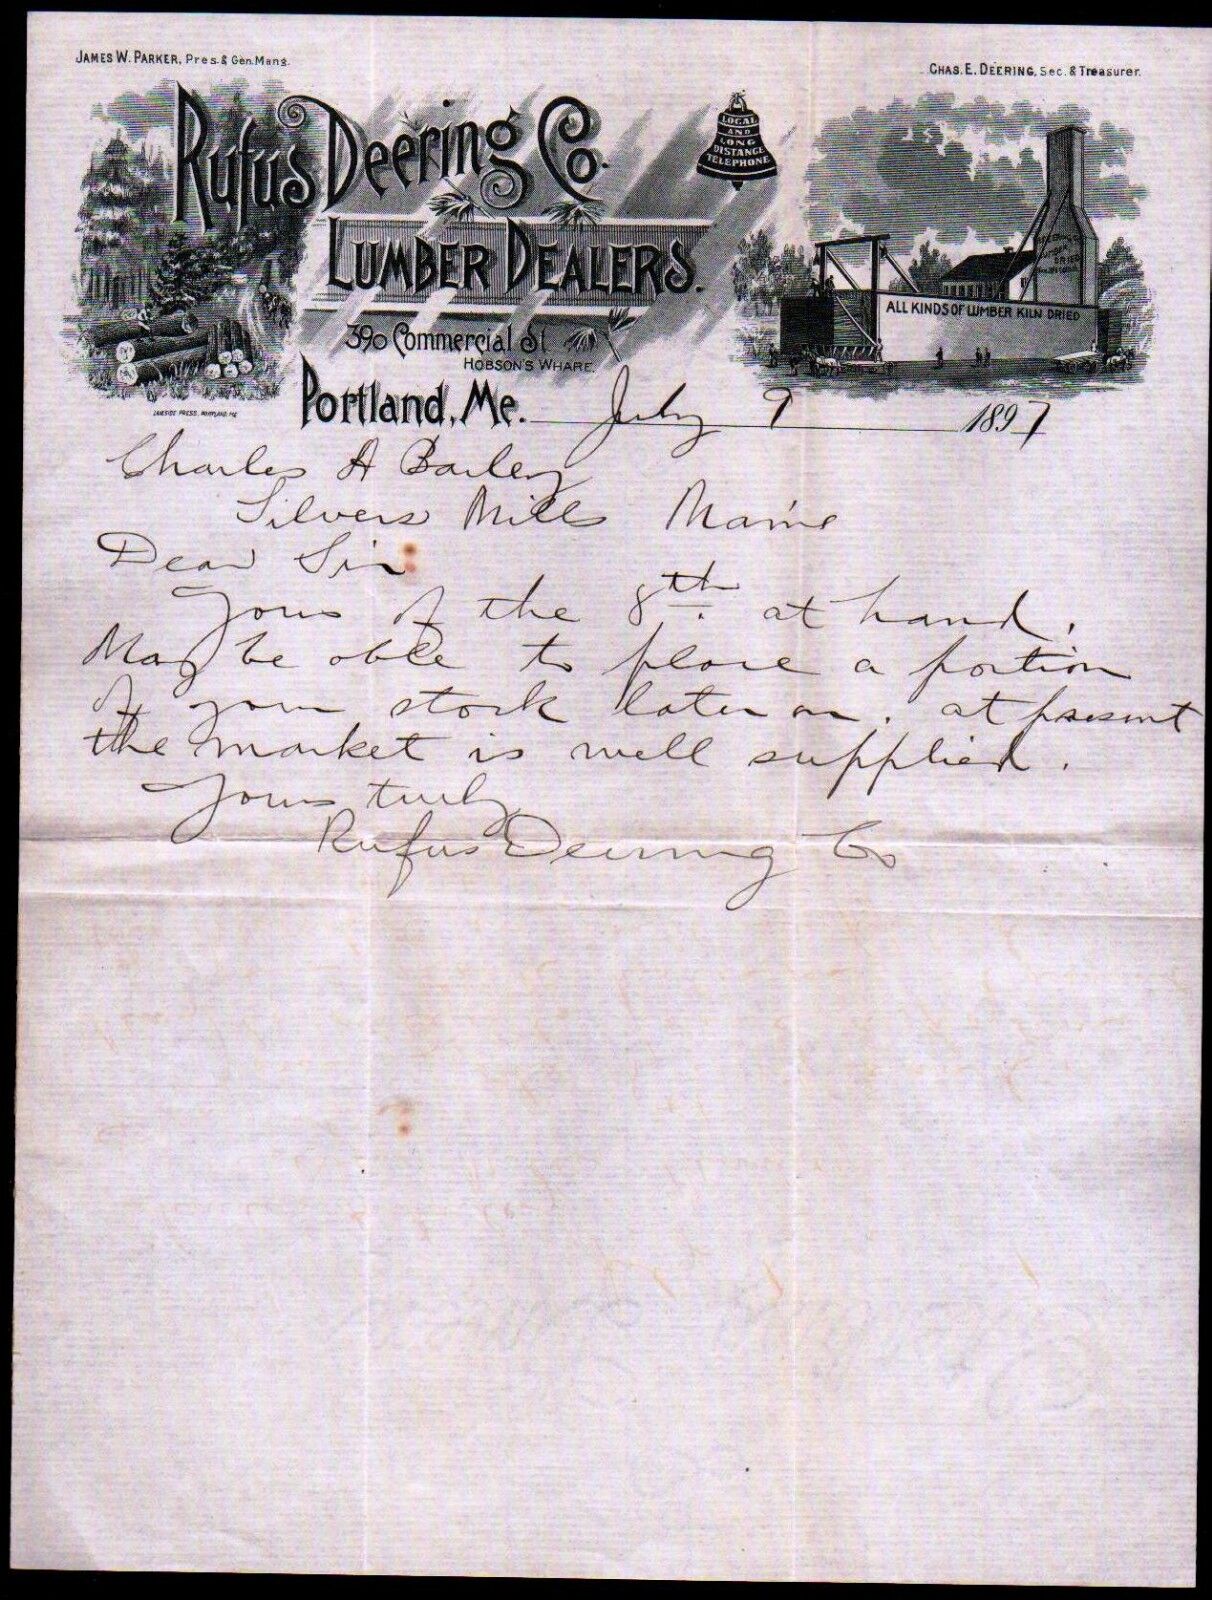 1897 Portland Me - Lumber - Rufus Deering Co - History Rare Letter Head Bill